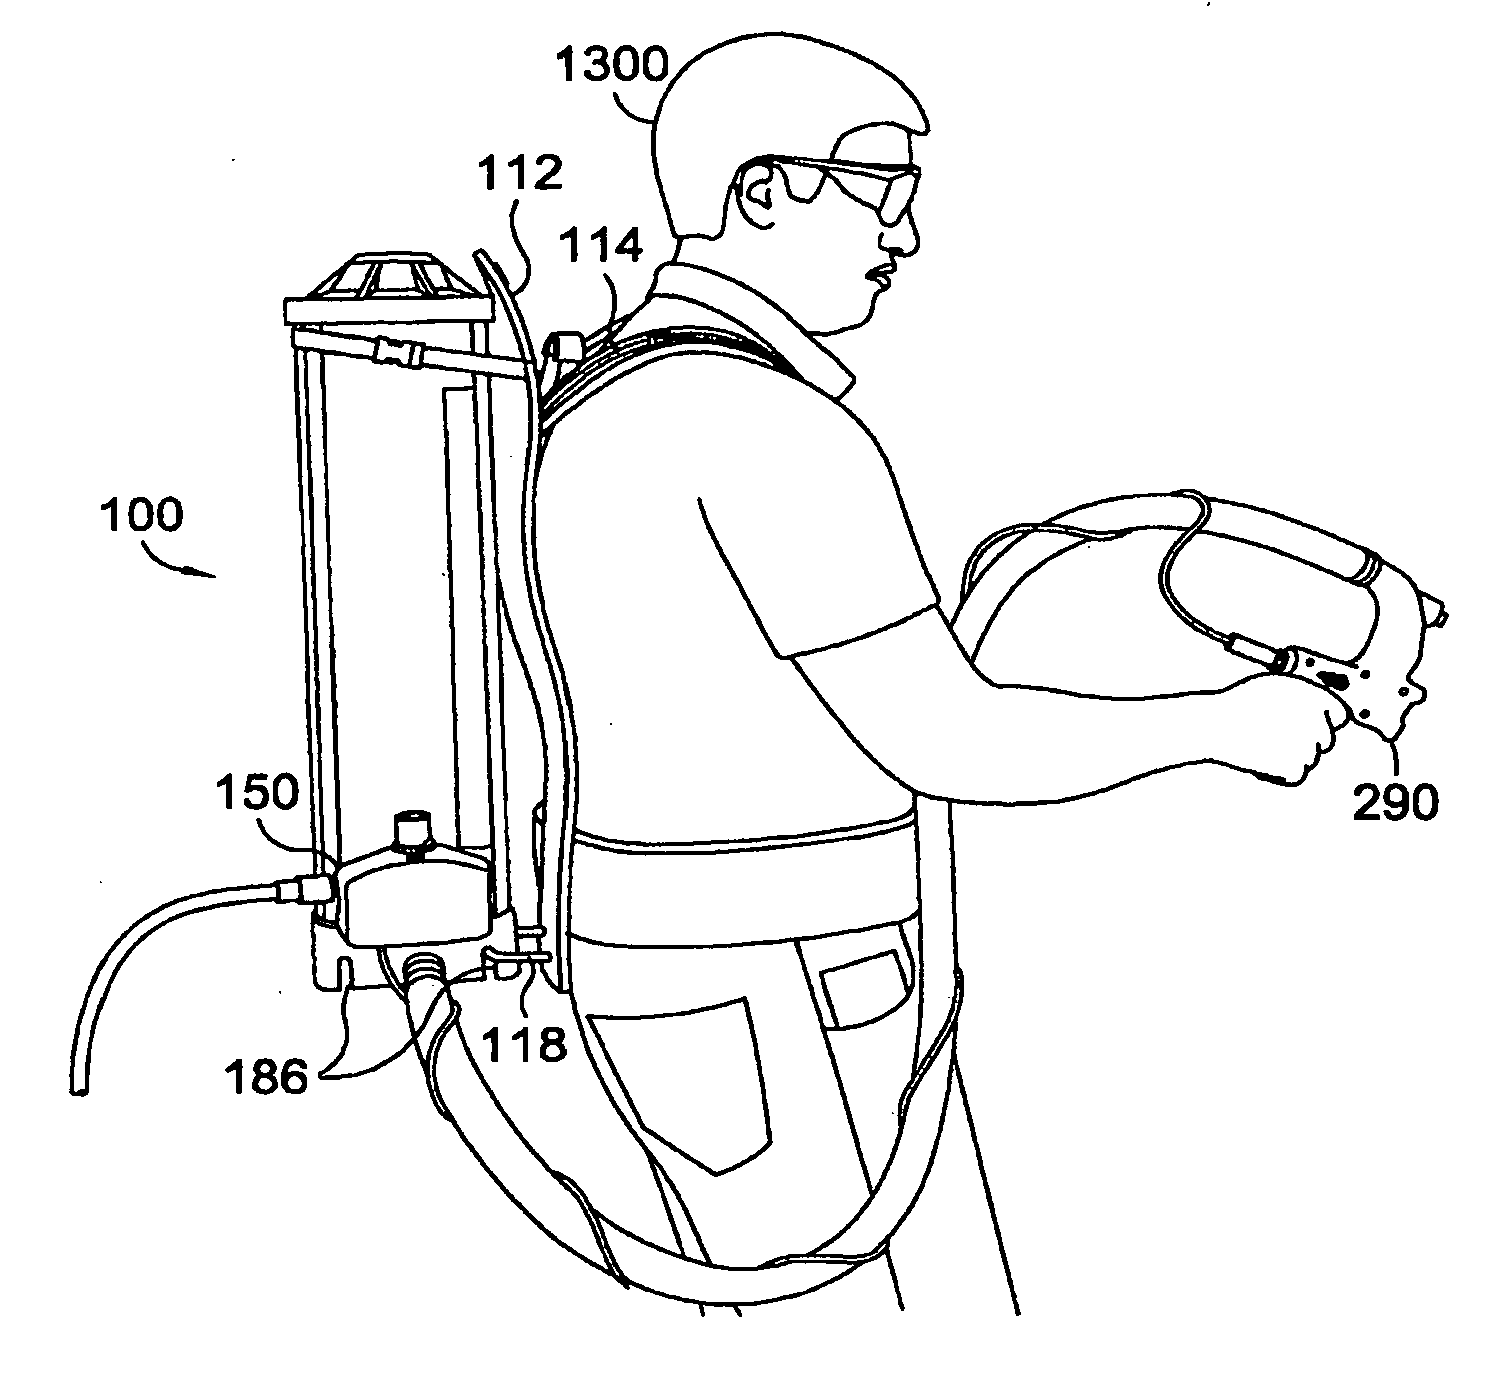 Portable texture-spraying apparatus for uniformly dispersing a viscous material